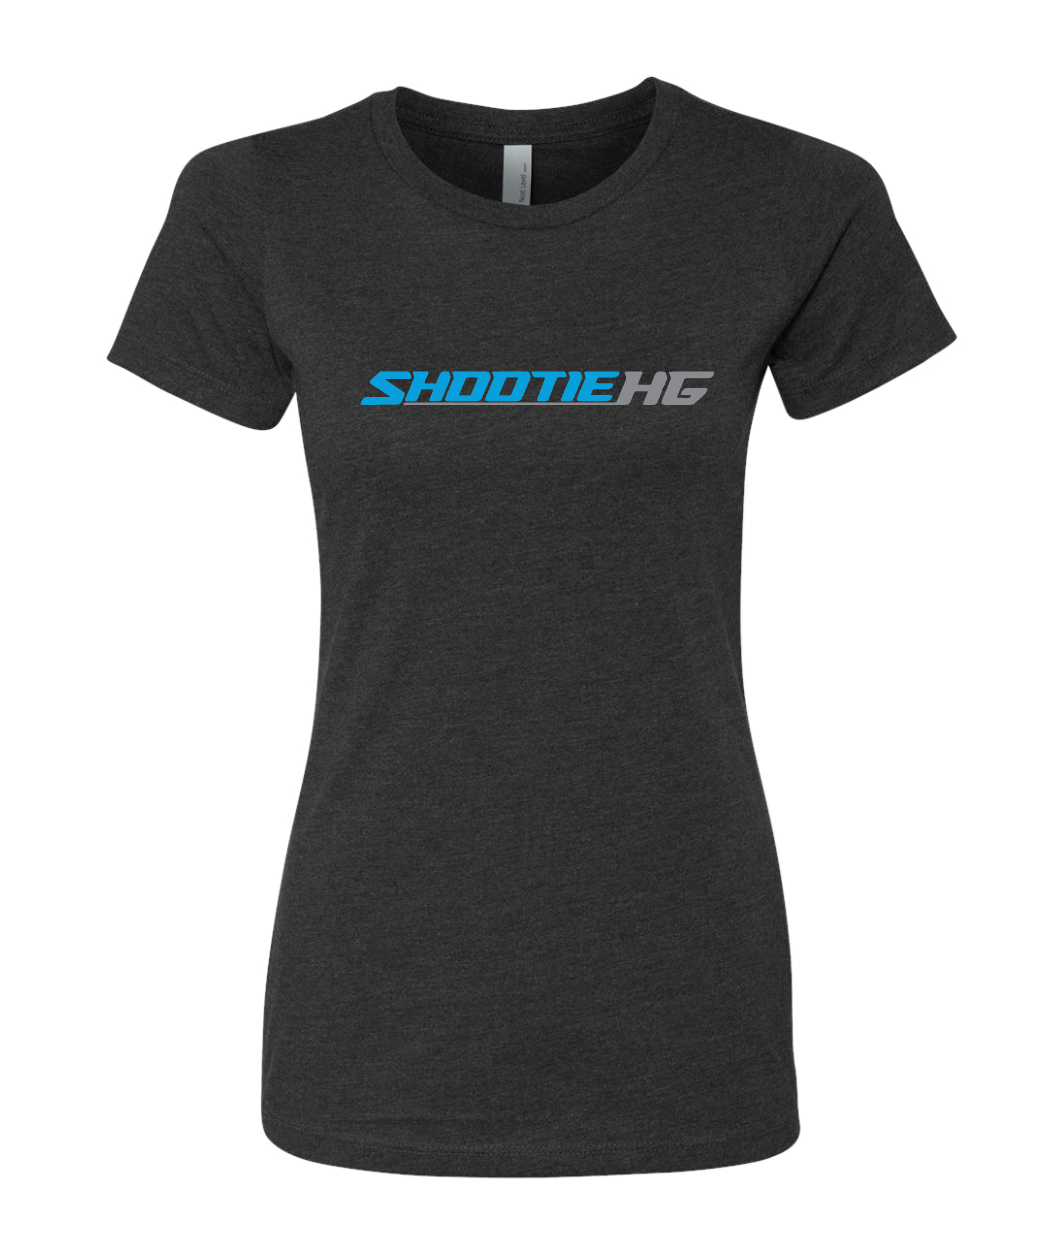 Shootie HG Girl Crew Shirt w/Blue Logo